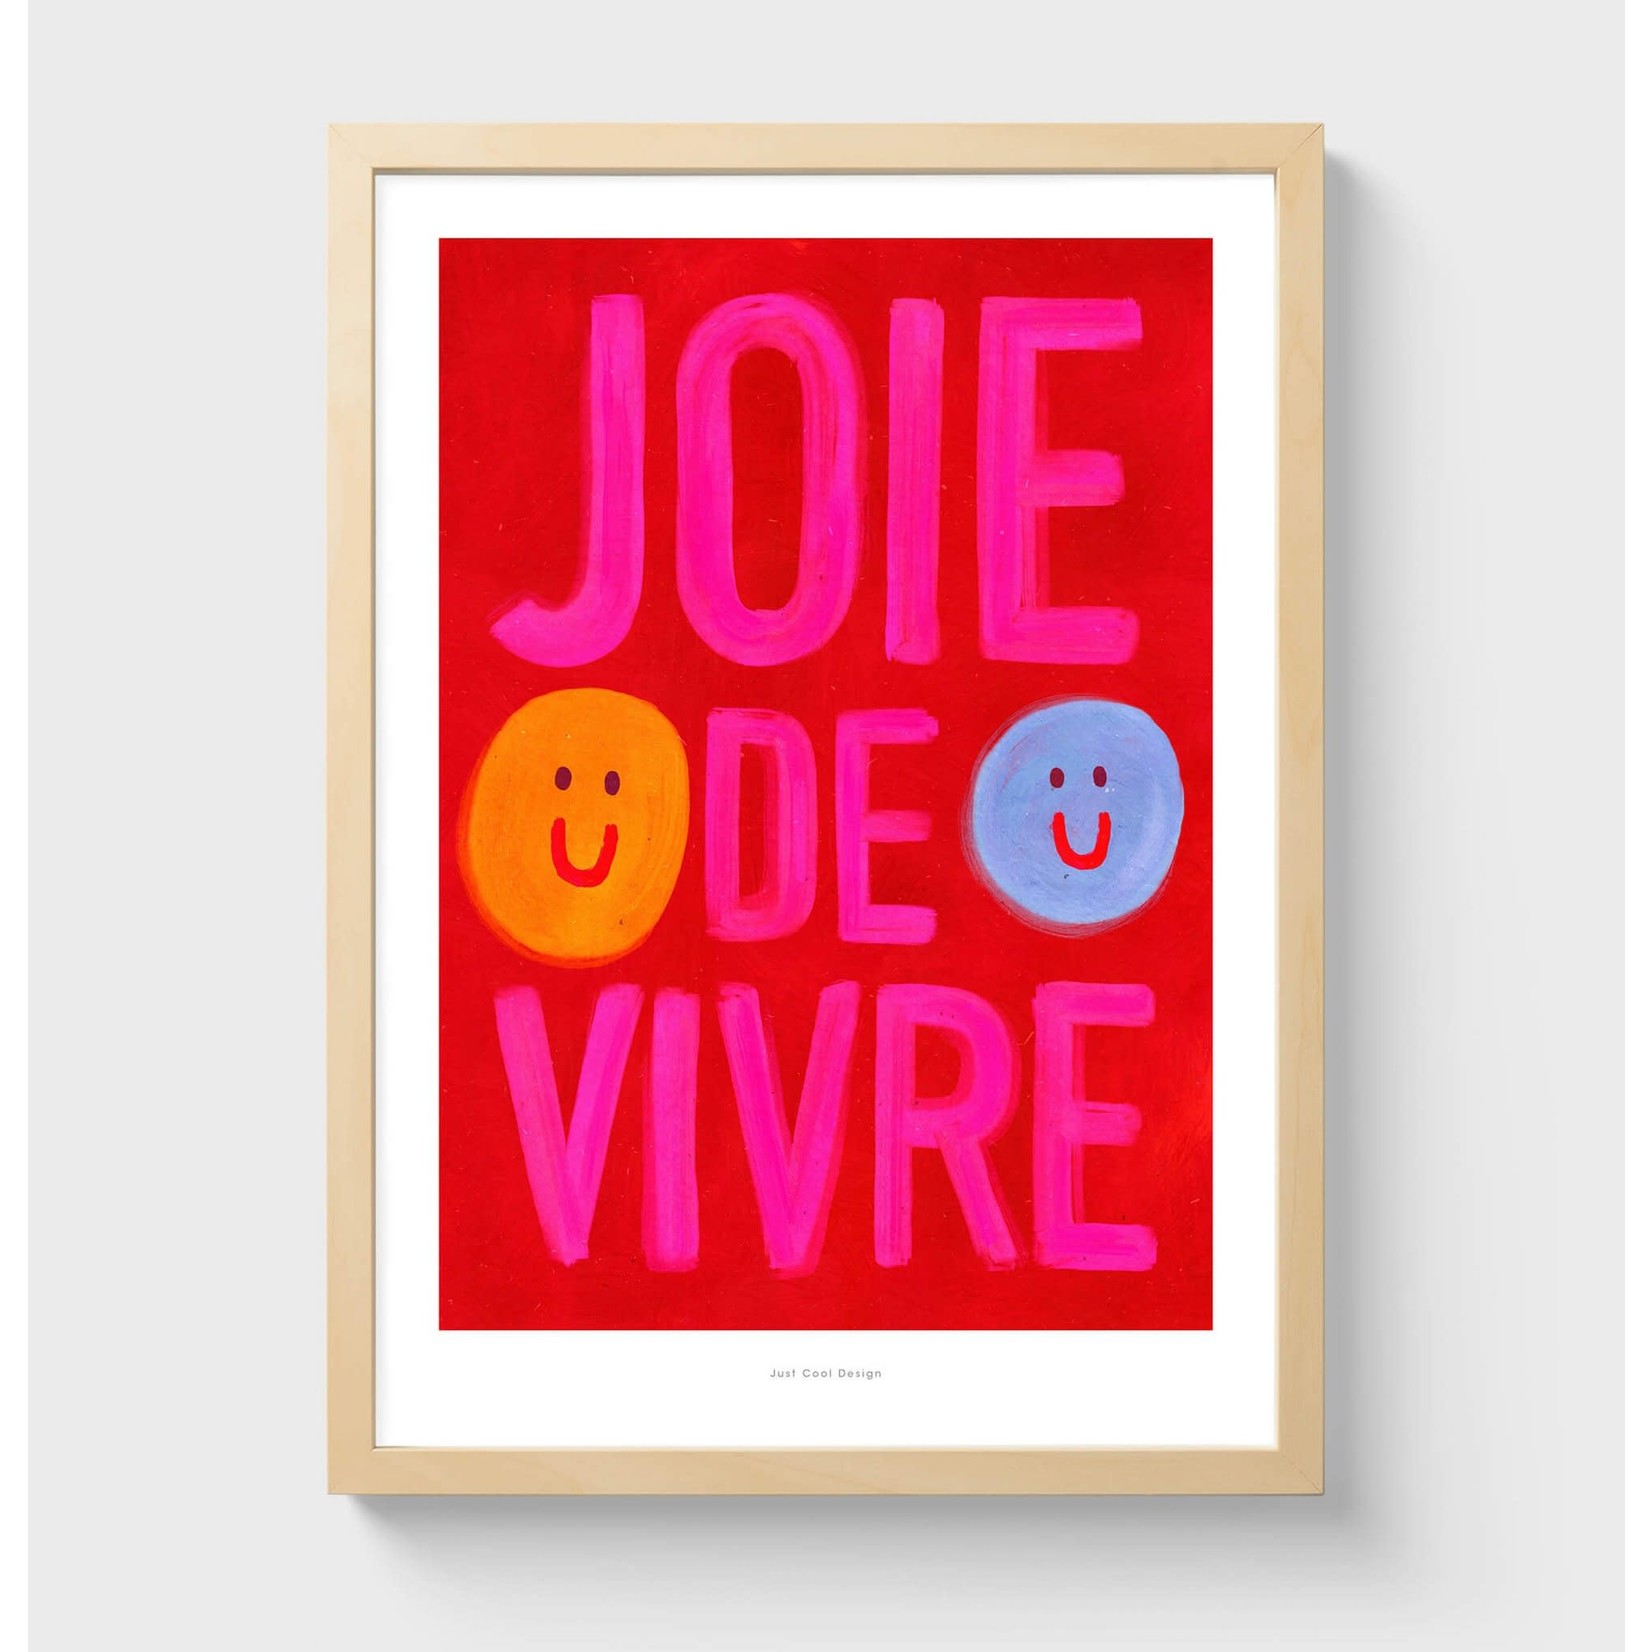 Just Cool Design Joie de vivre | Illustration art print poster